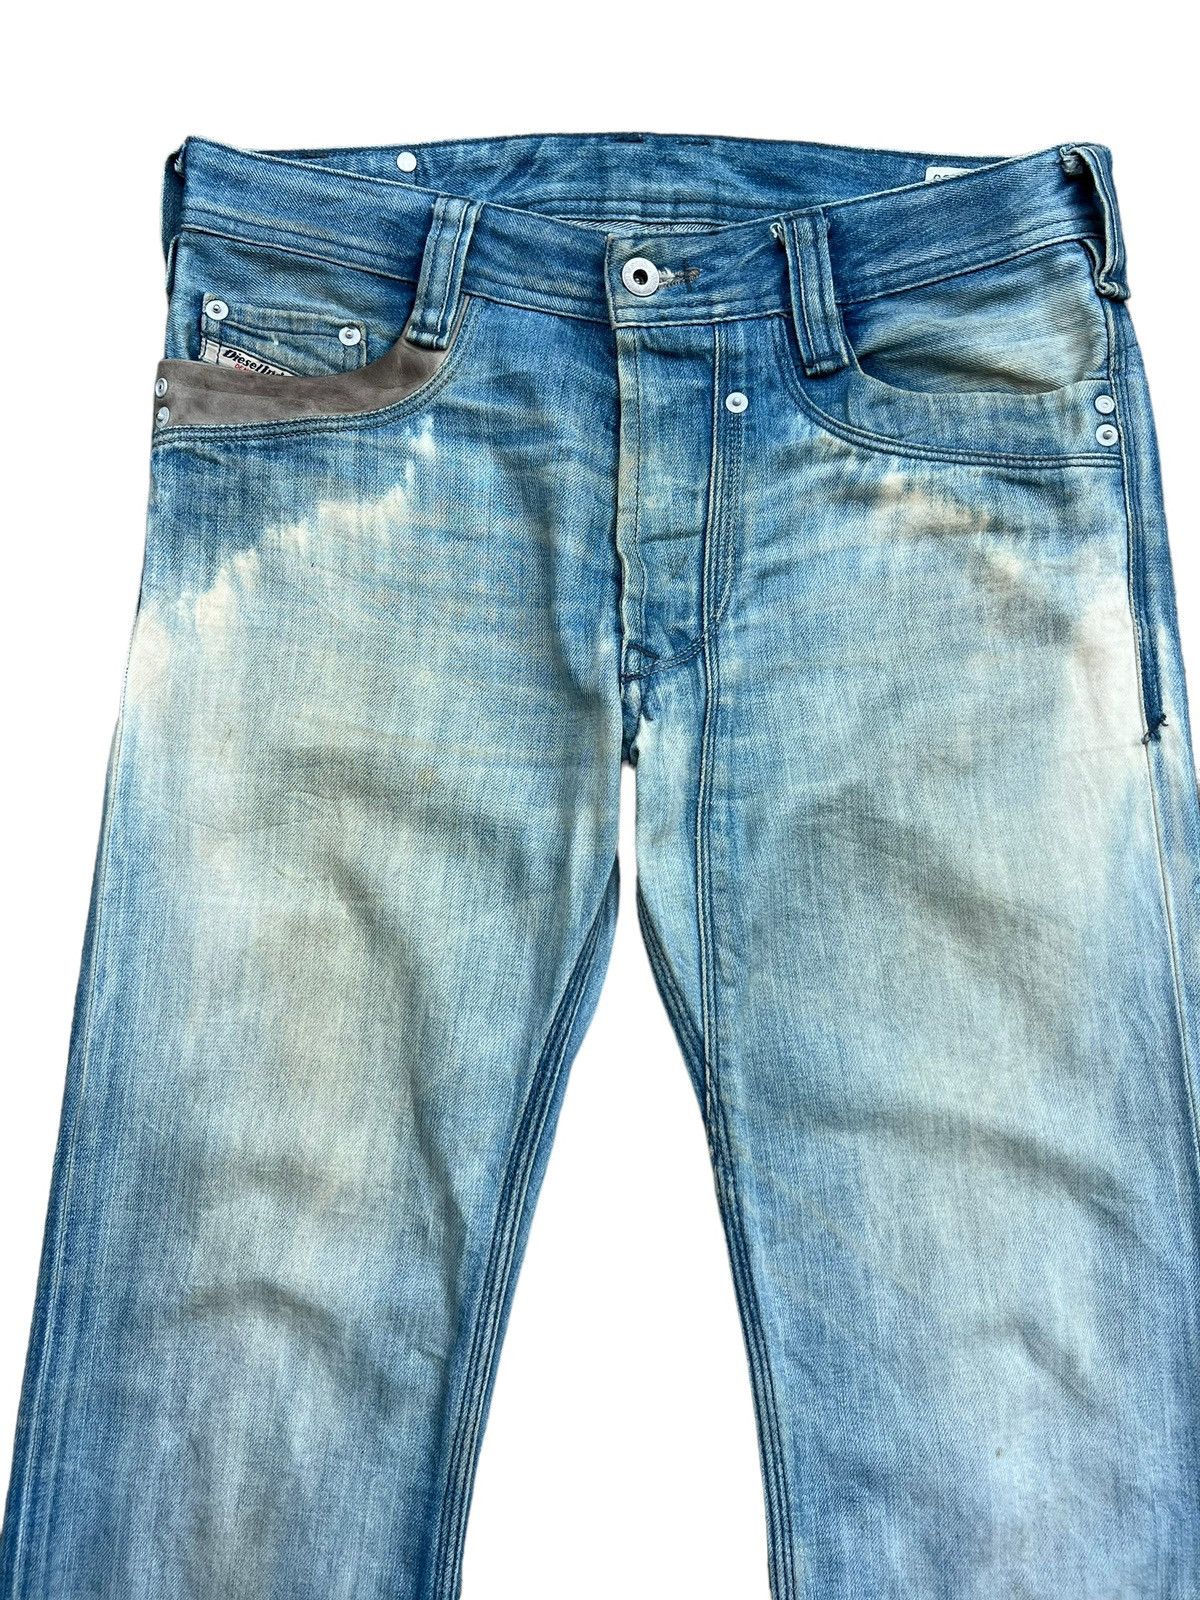 Vintage Diesel Leather Faded Distressed Denim Jeans 32x31 - 4